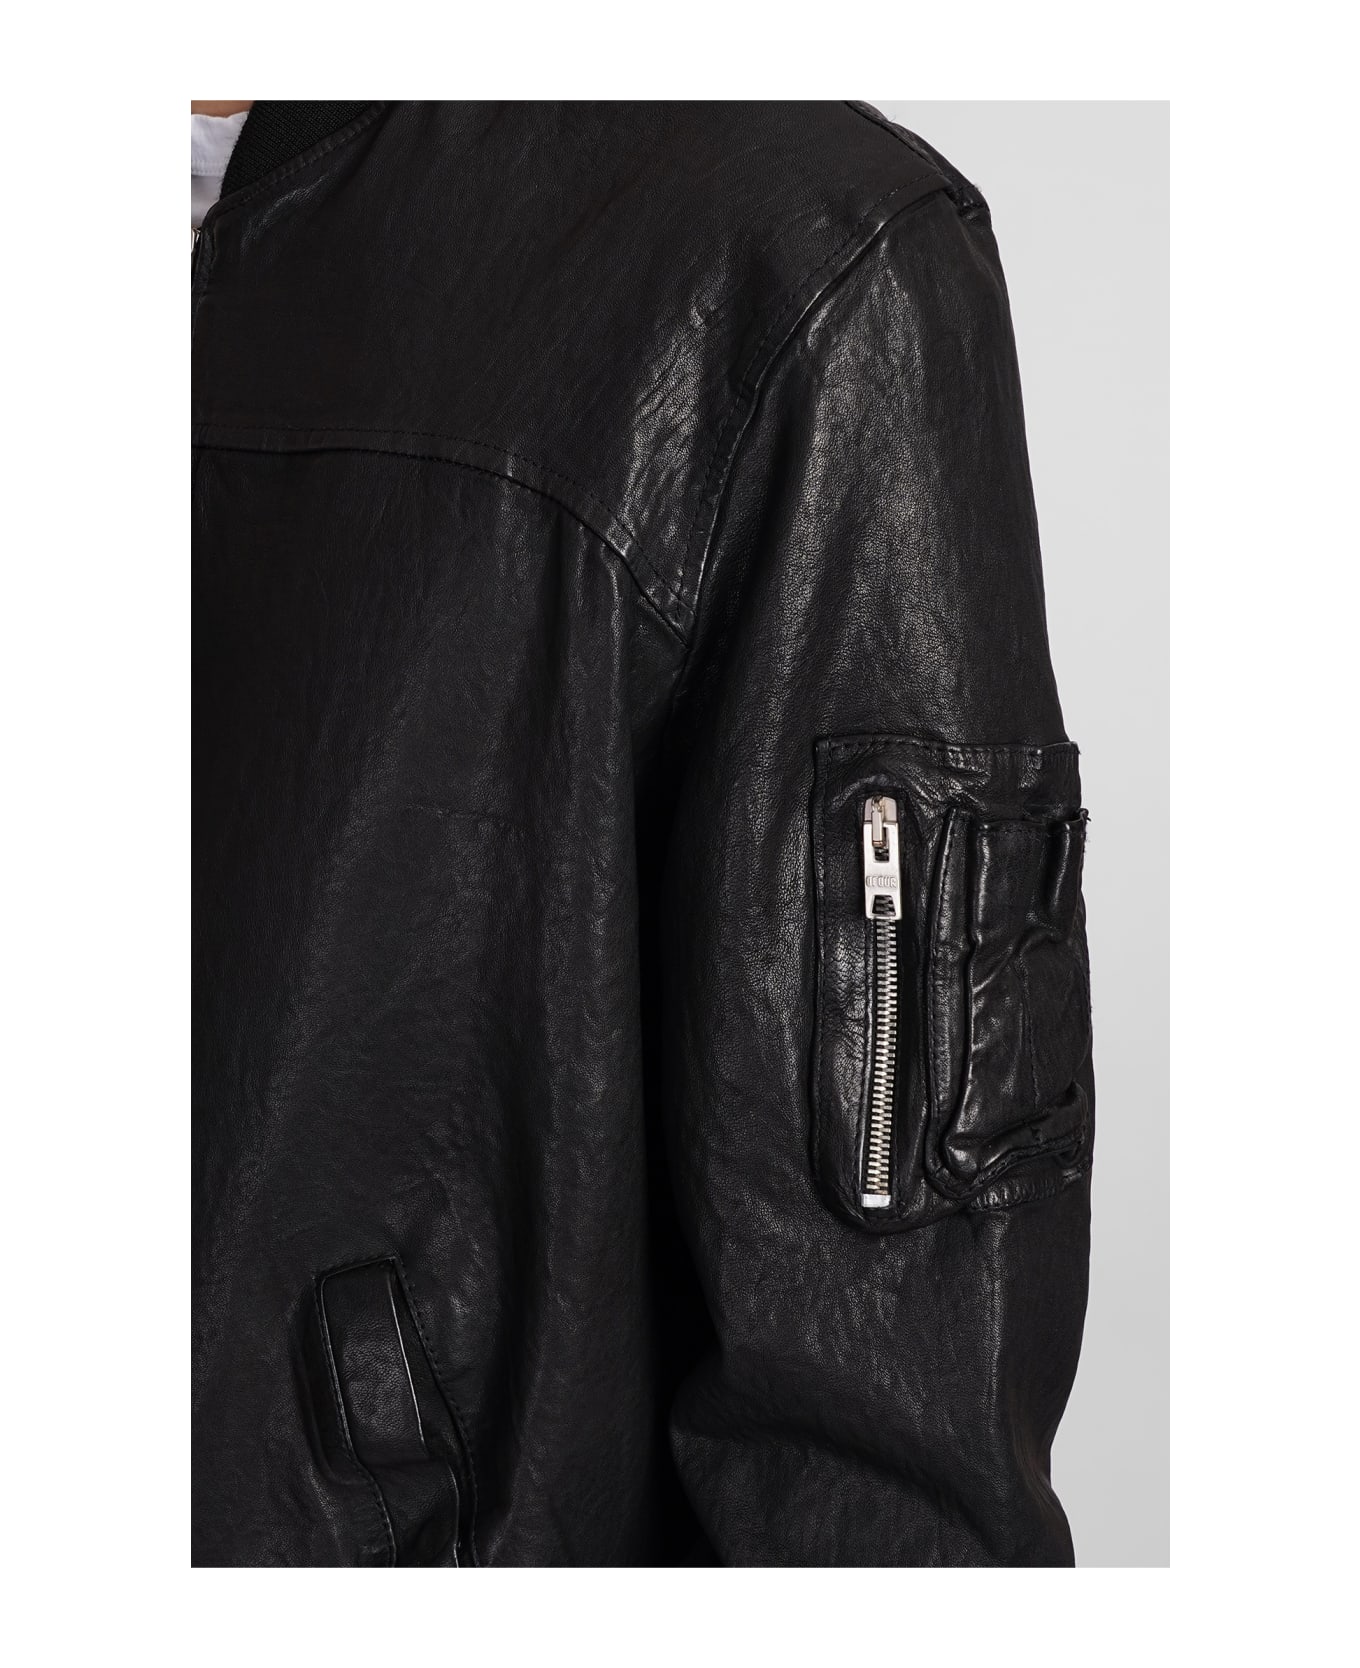 DFour Leather Jacket In Black Leather - black レザージャケット